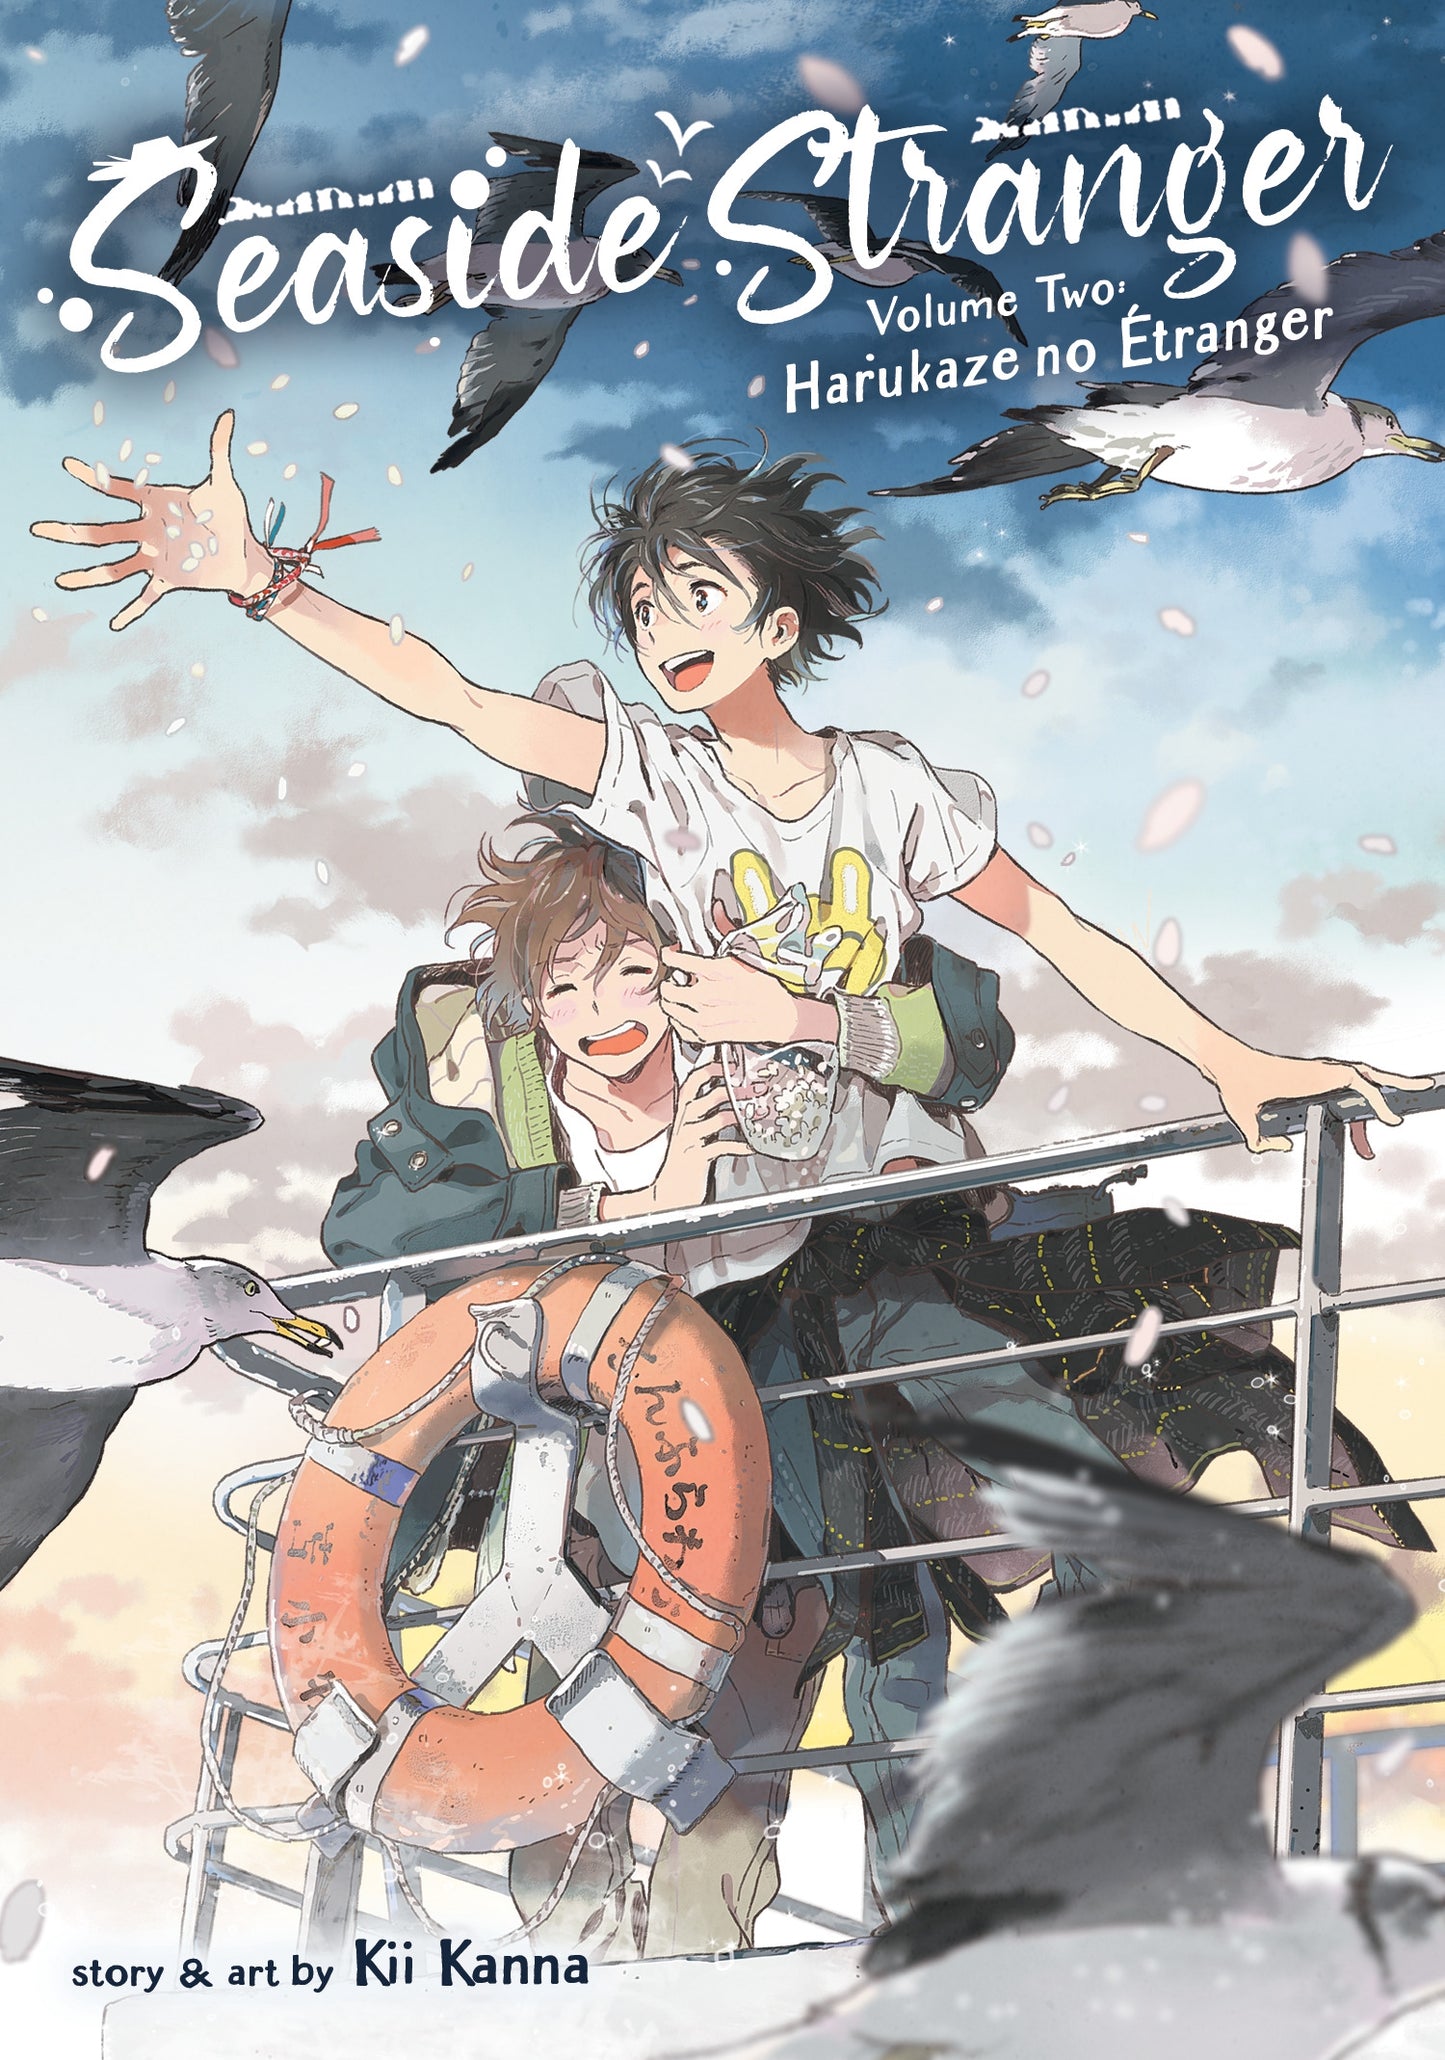 Seaside Stranger Vol. 2 : Harukaze no Étranger - Manga Warehouse